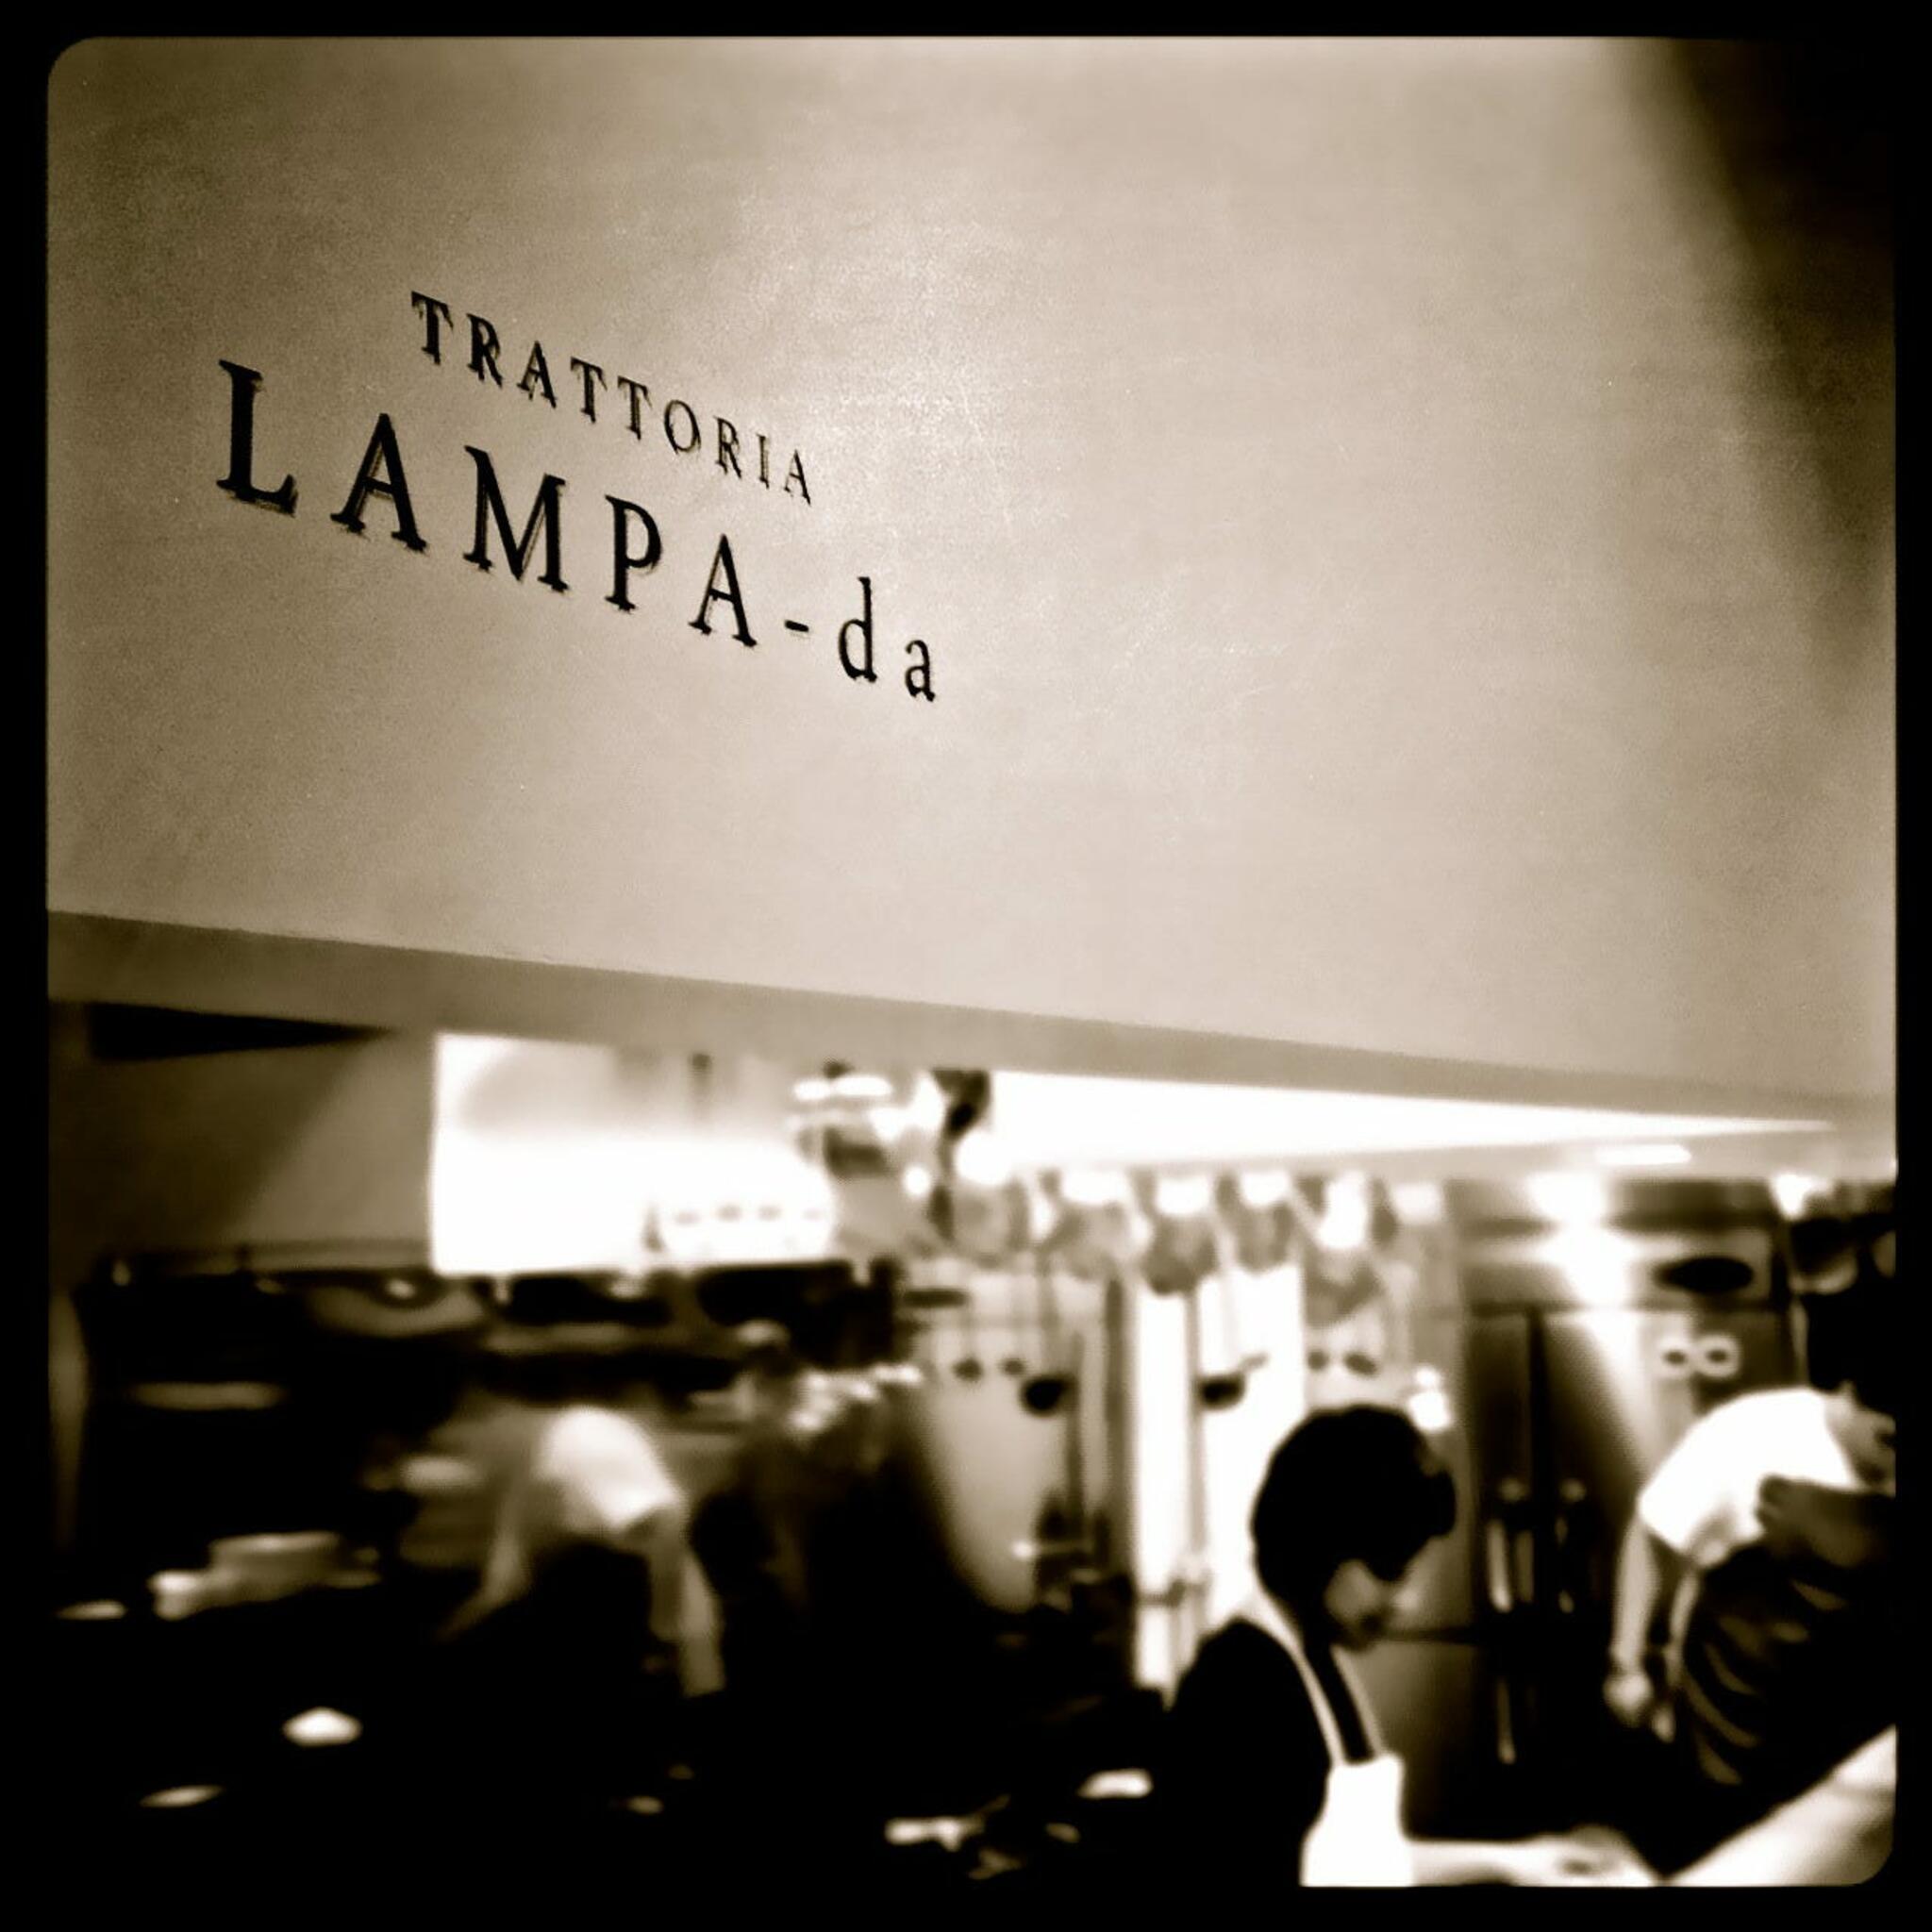 TRATTORIA LAMPA-da(ランパーダ)の代表写真7